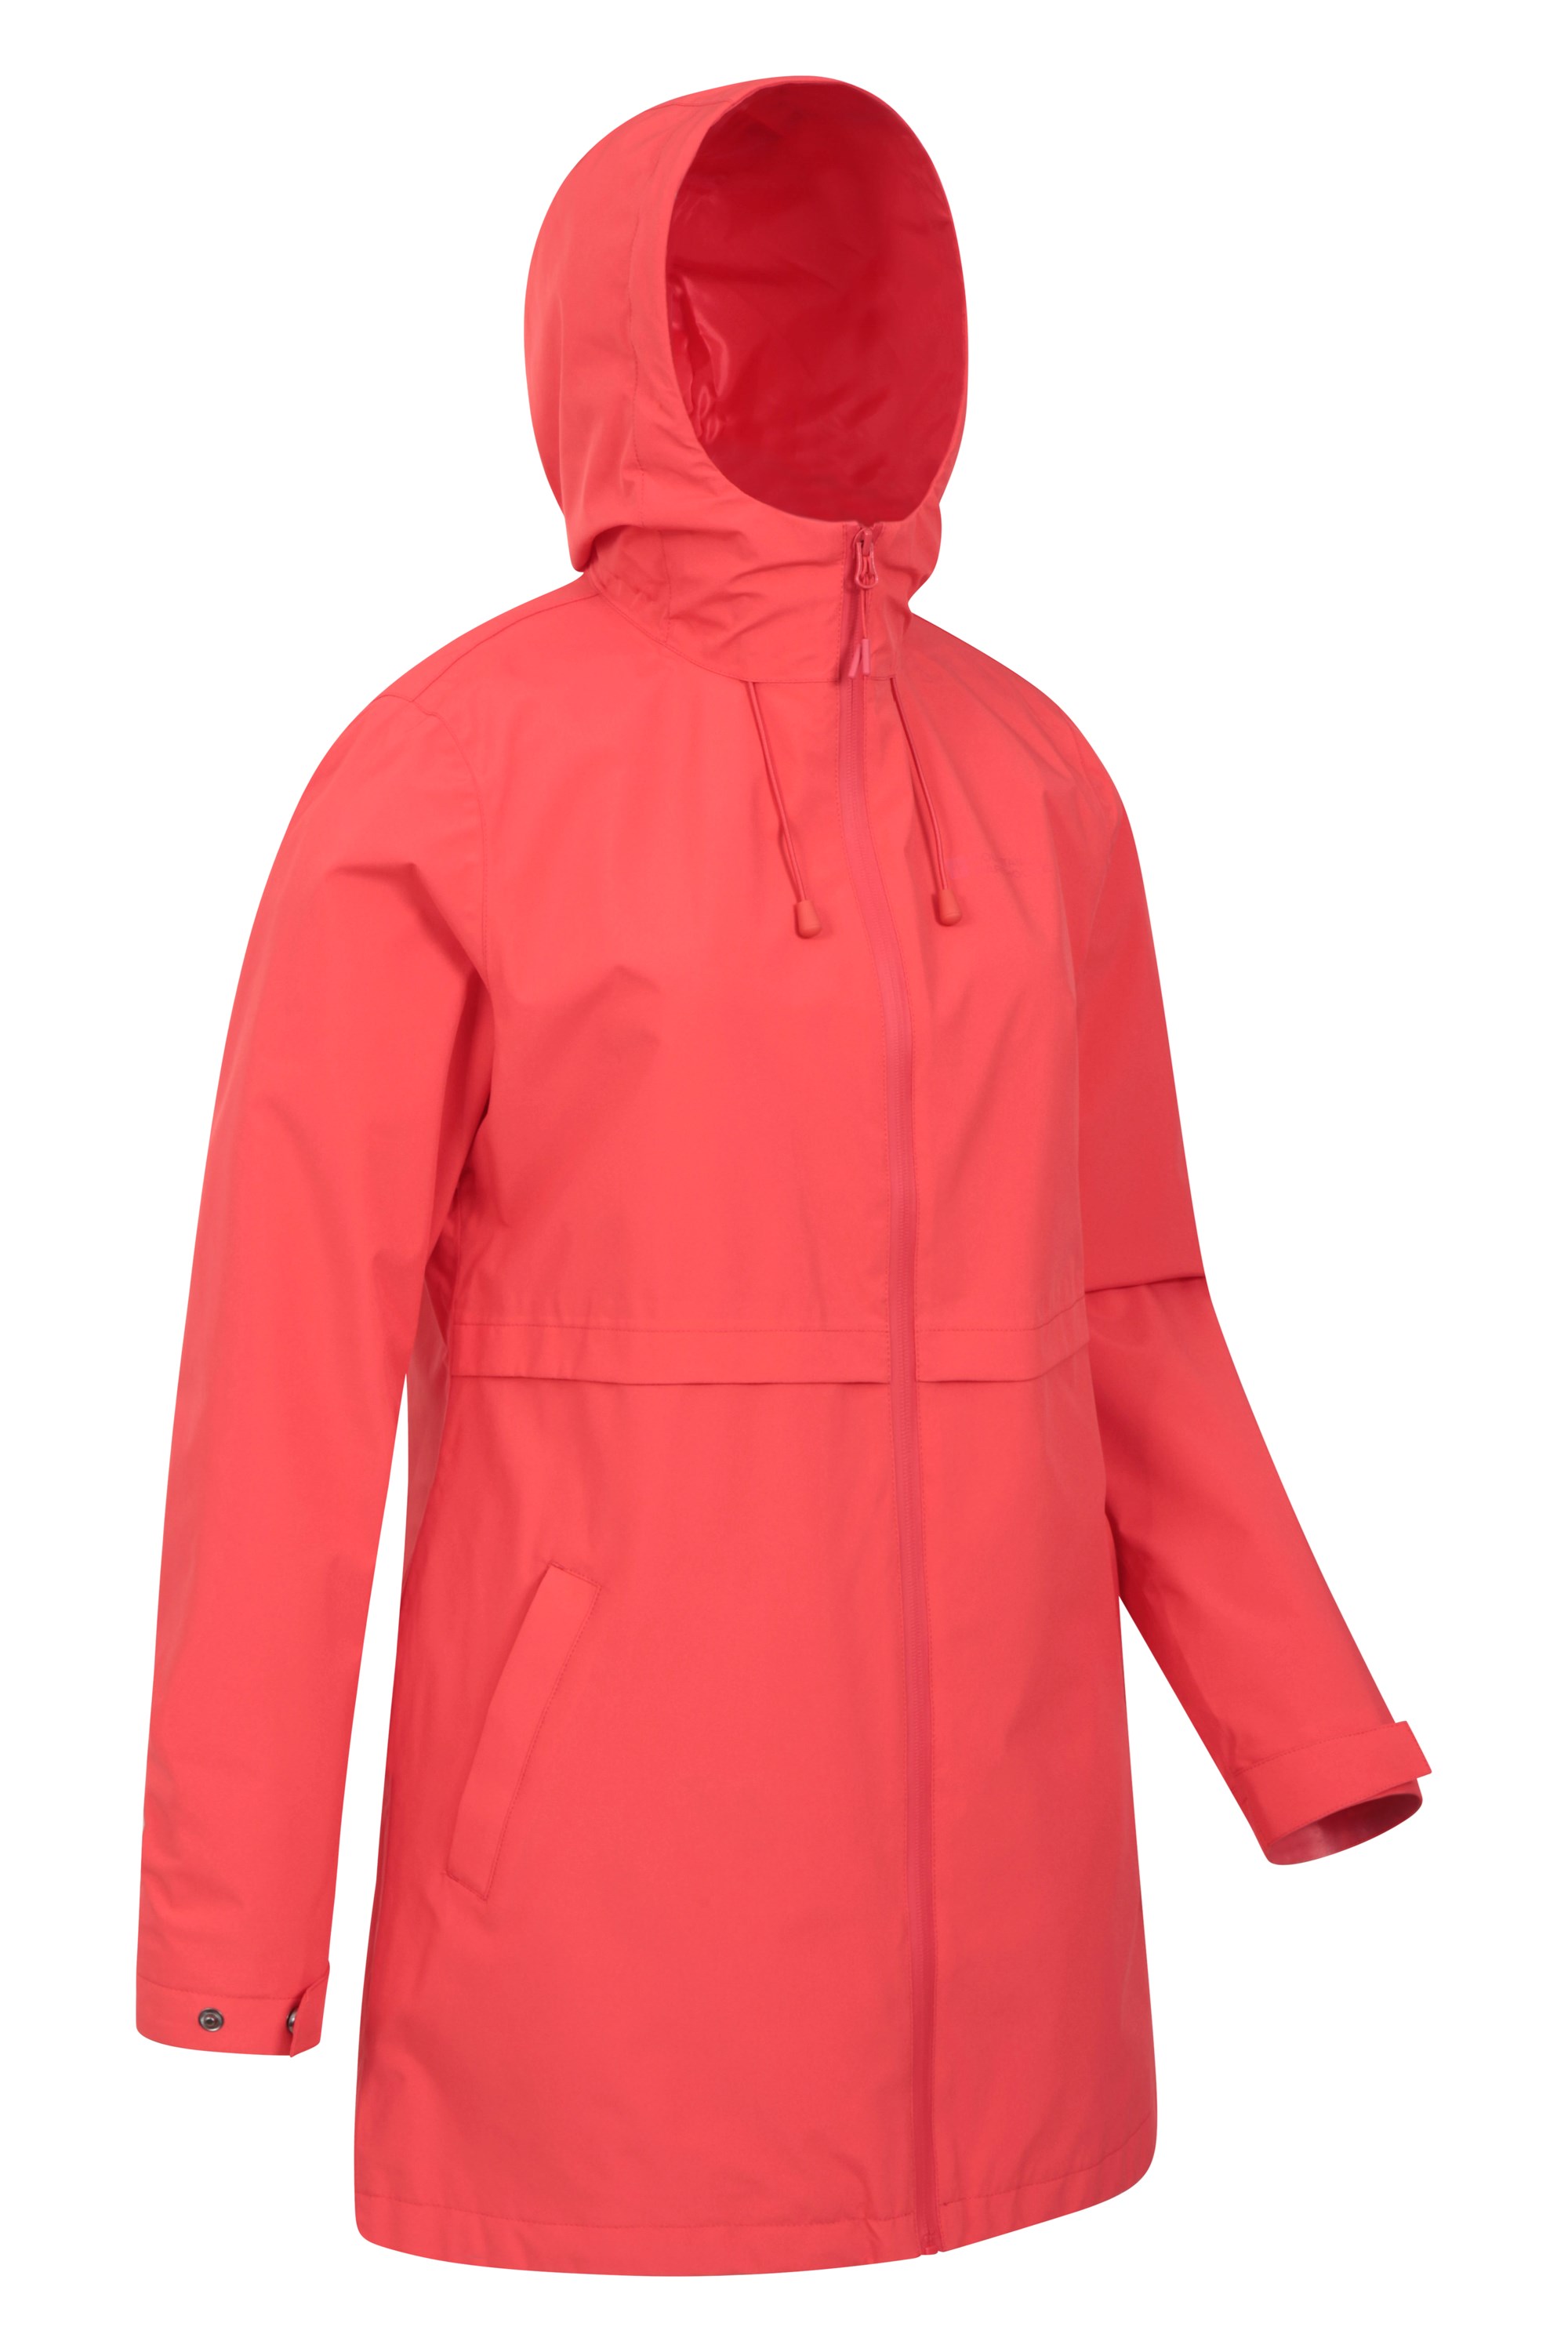 Mountain Warehouse Wms Commuter Womens Waterproof Jacket 